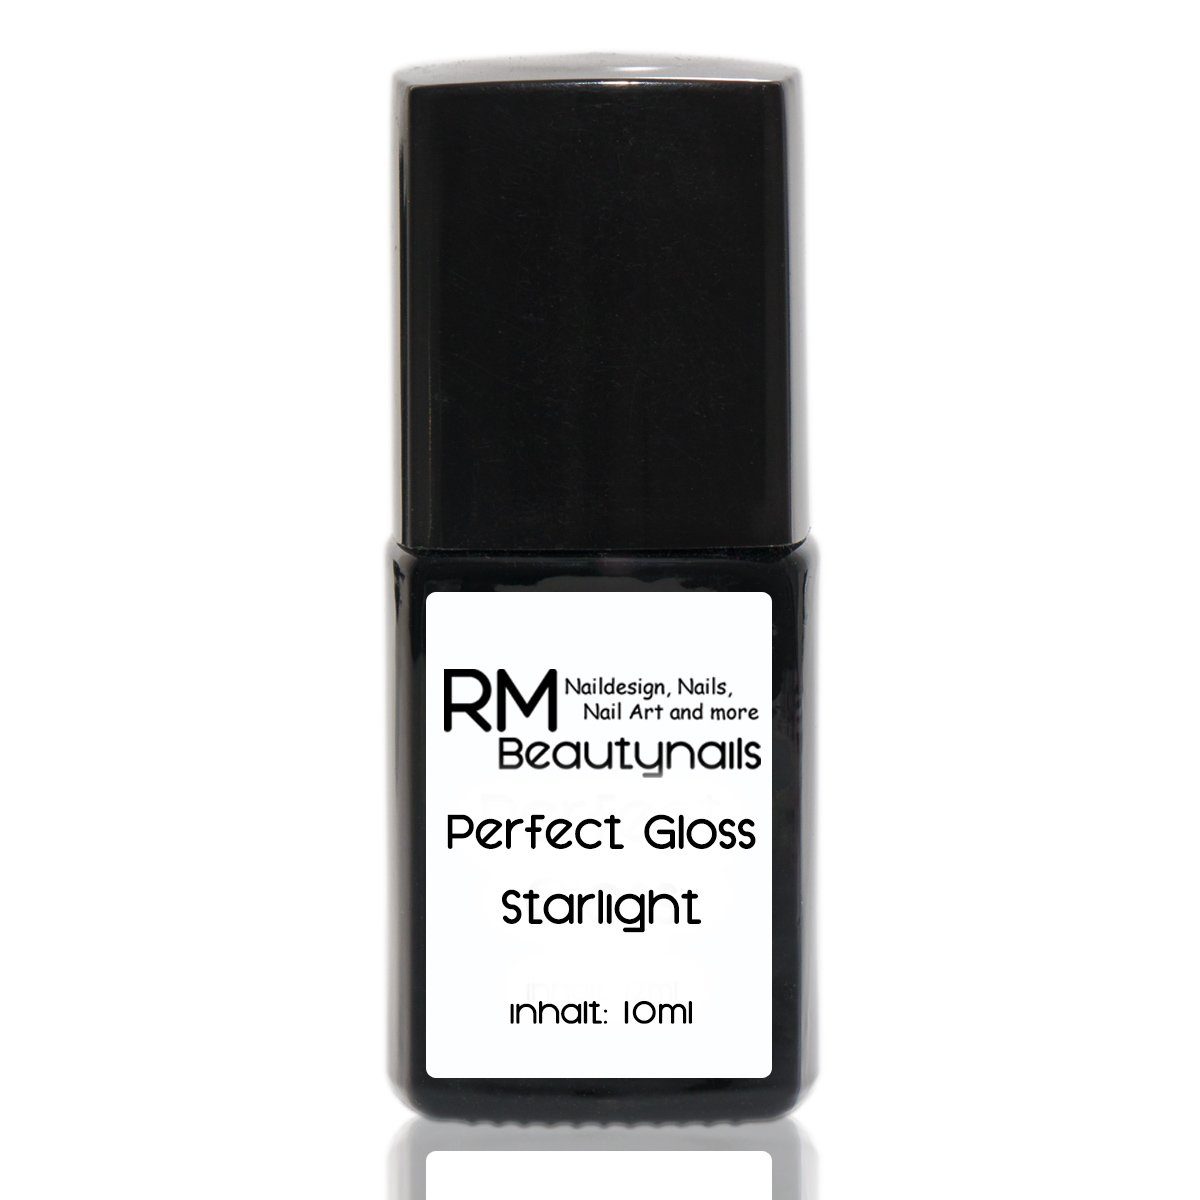 RM Beautynails UV-Gel Perfect Gloss Glanz UV-Gel Led Nagelgel Quickfinish Finishgel, vegan Perfect Gloss Starlight